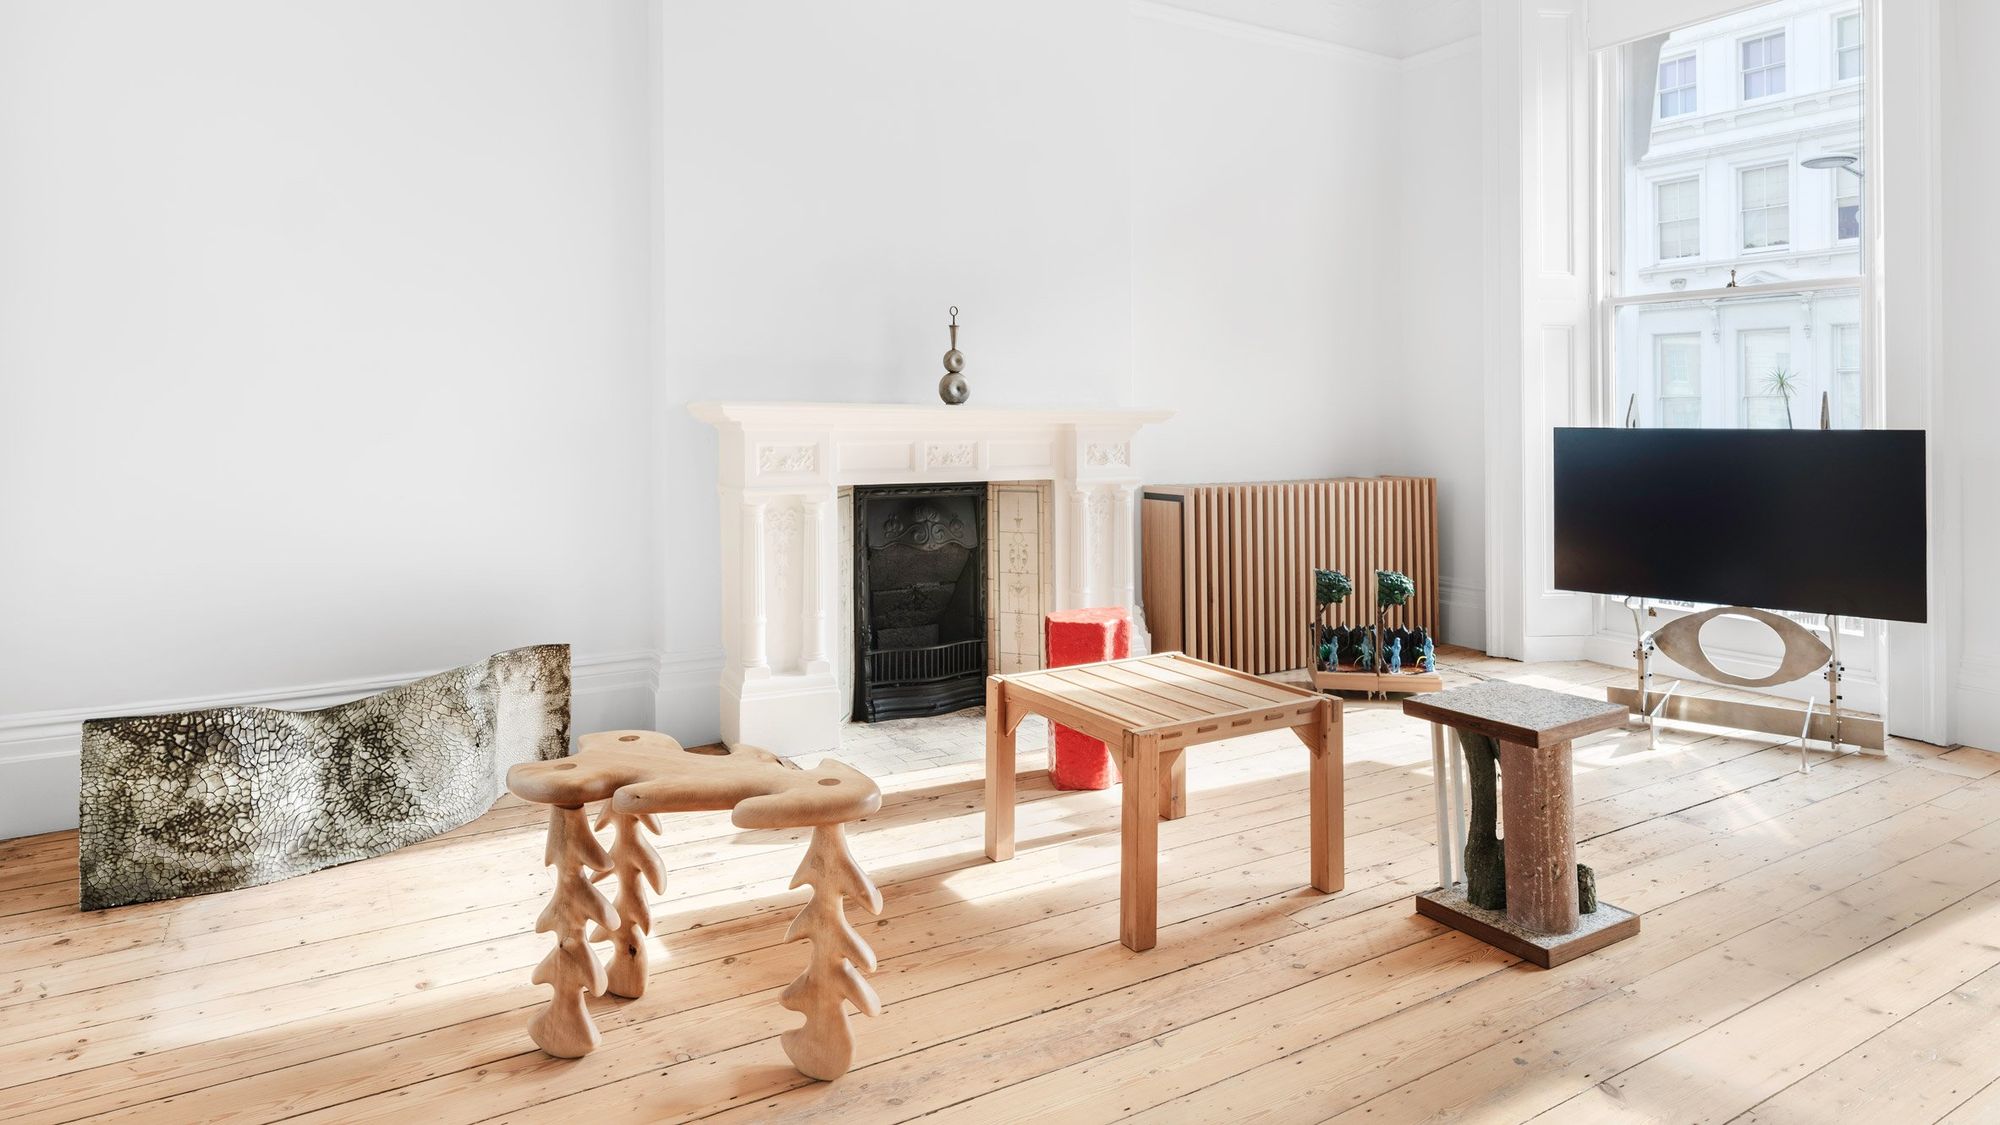 Pyton Place exhibition shows how Bauhaus influenced Norwegian design